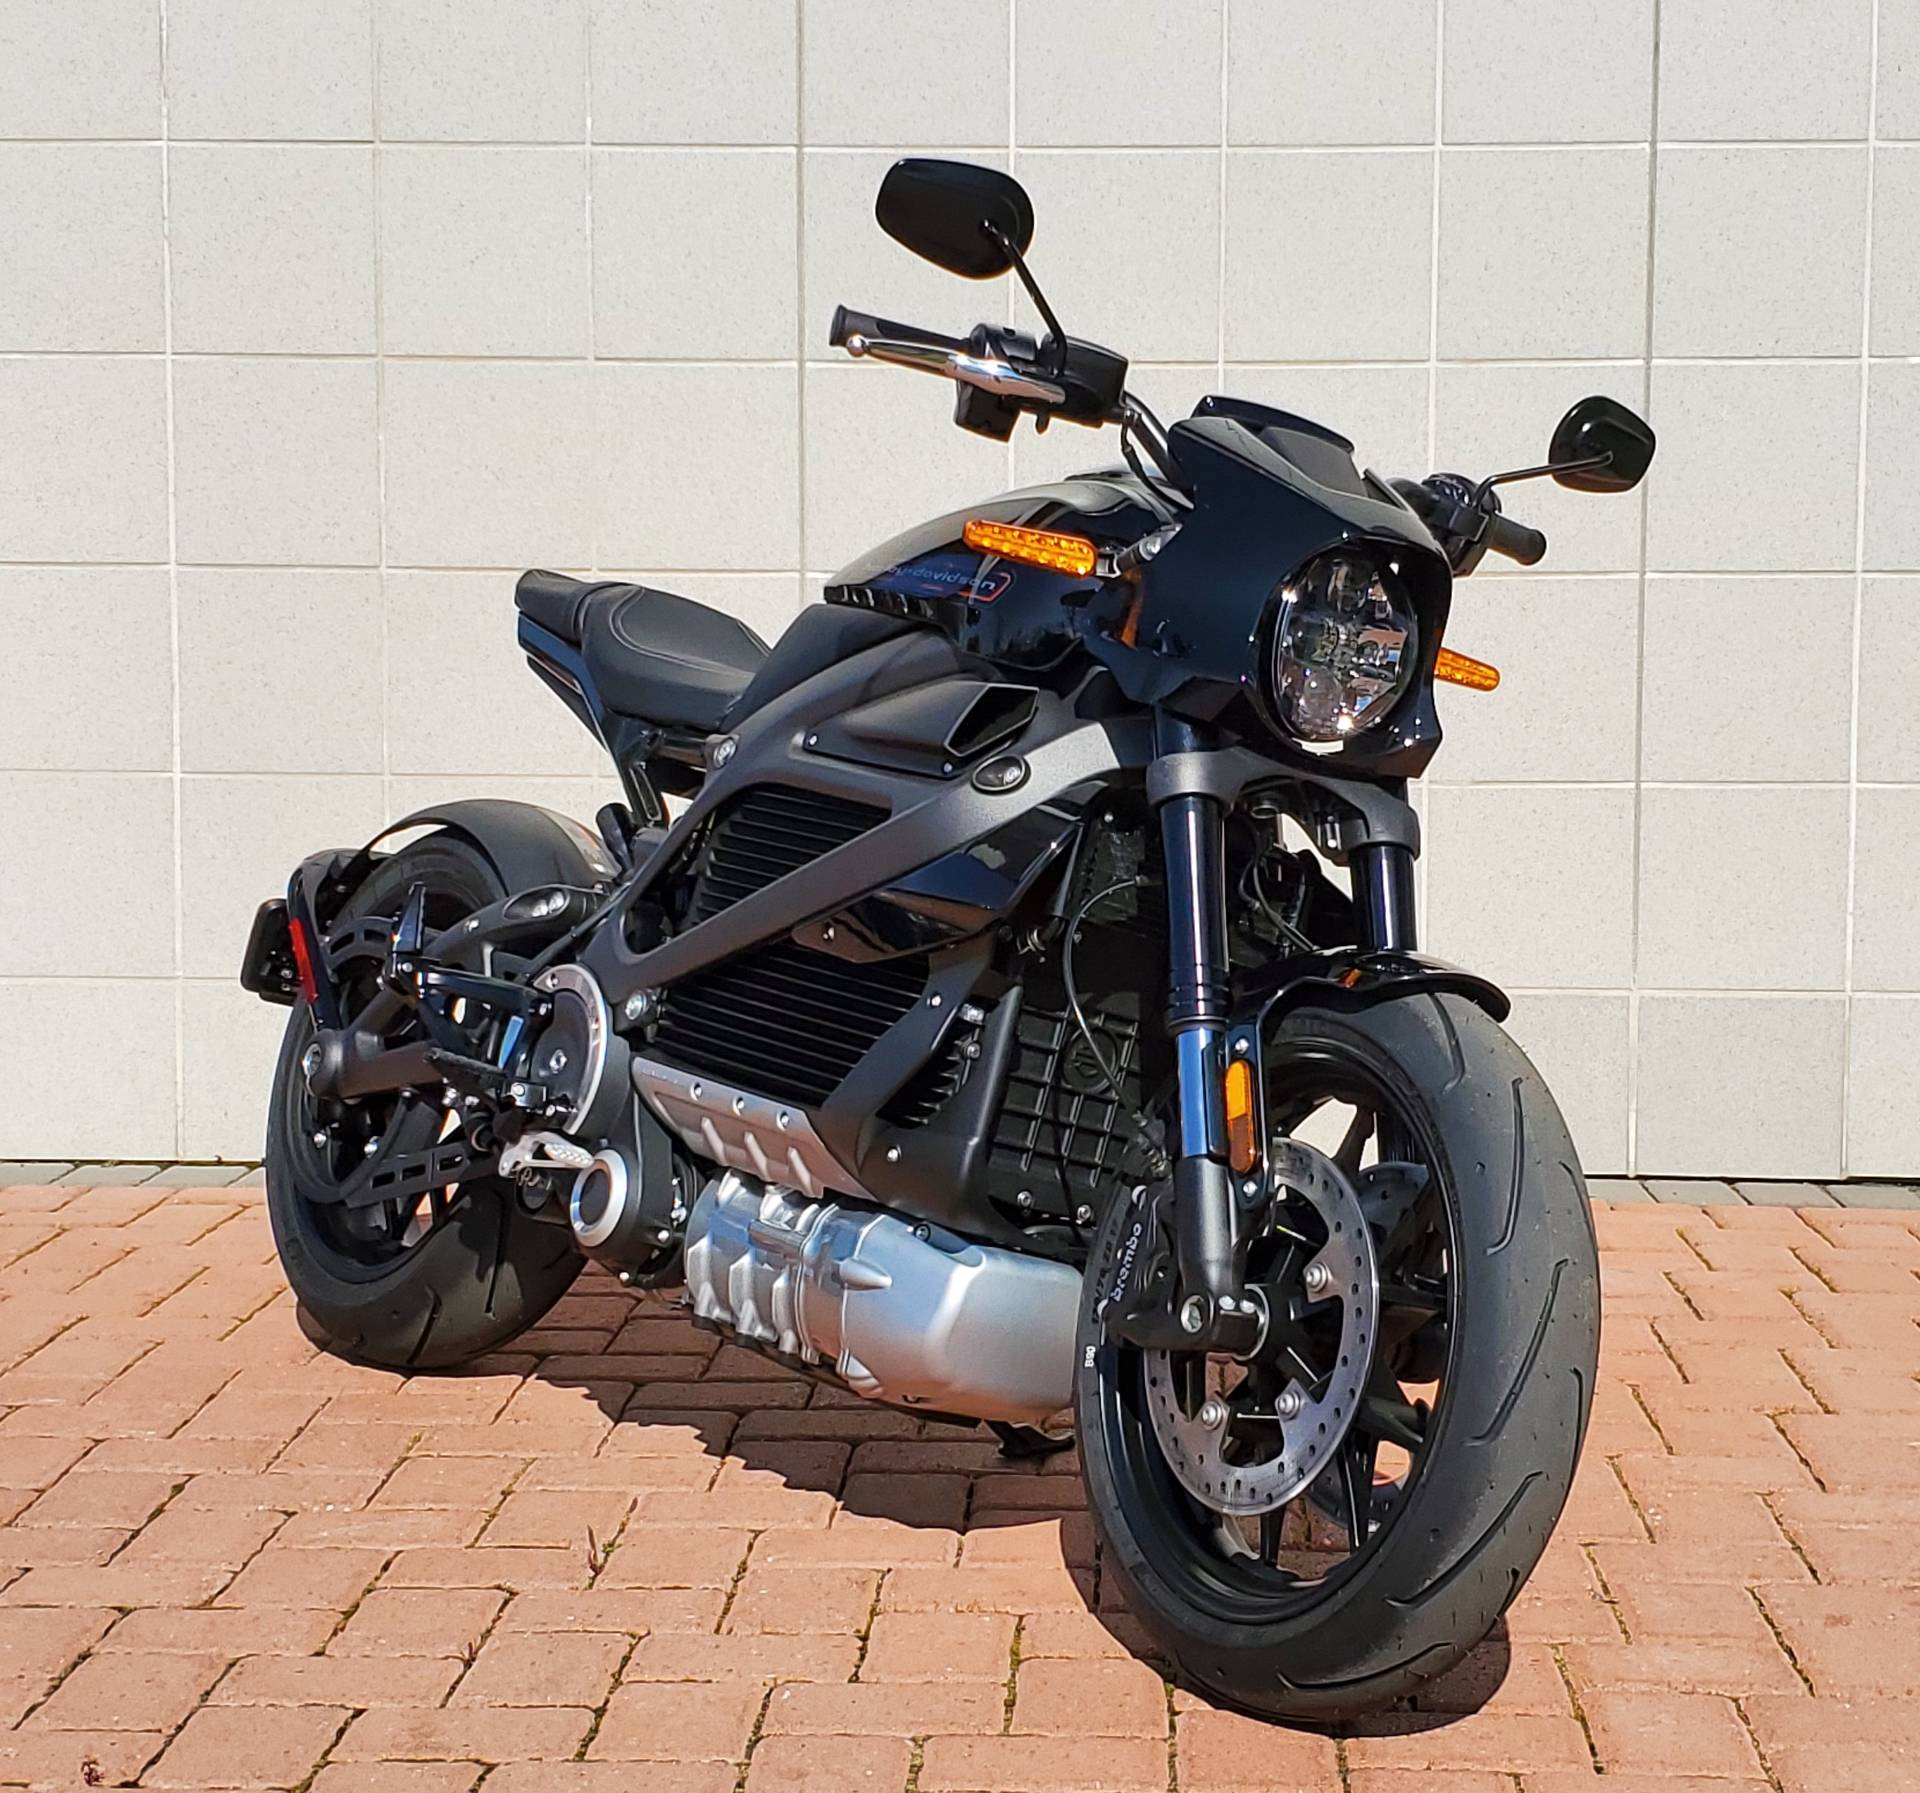 New 2020 Harley Davidson Livewire Vivid Black Motorcycles In Livermore Ca 801146